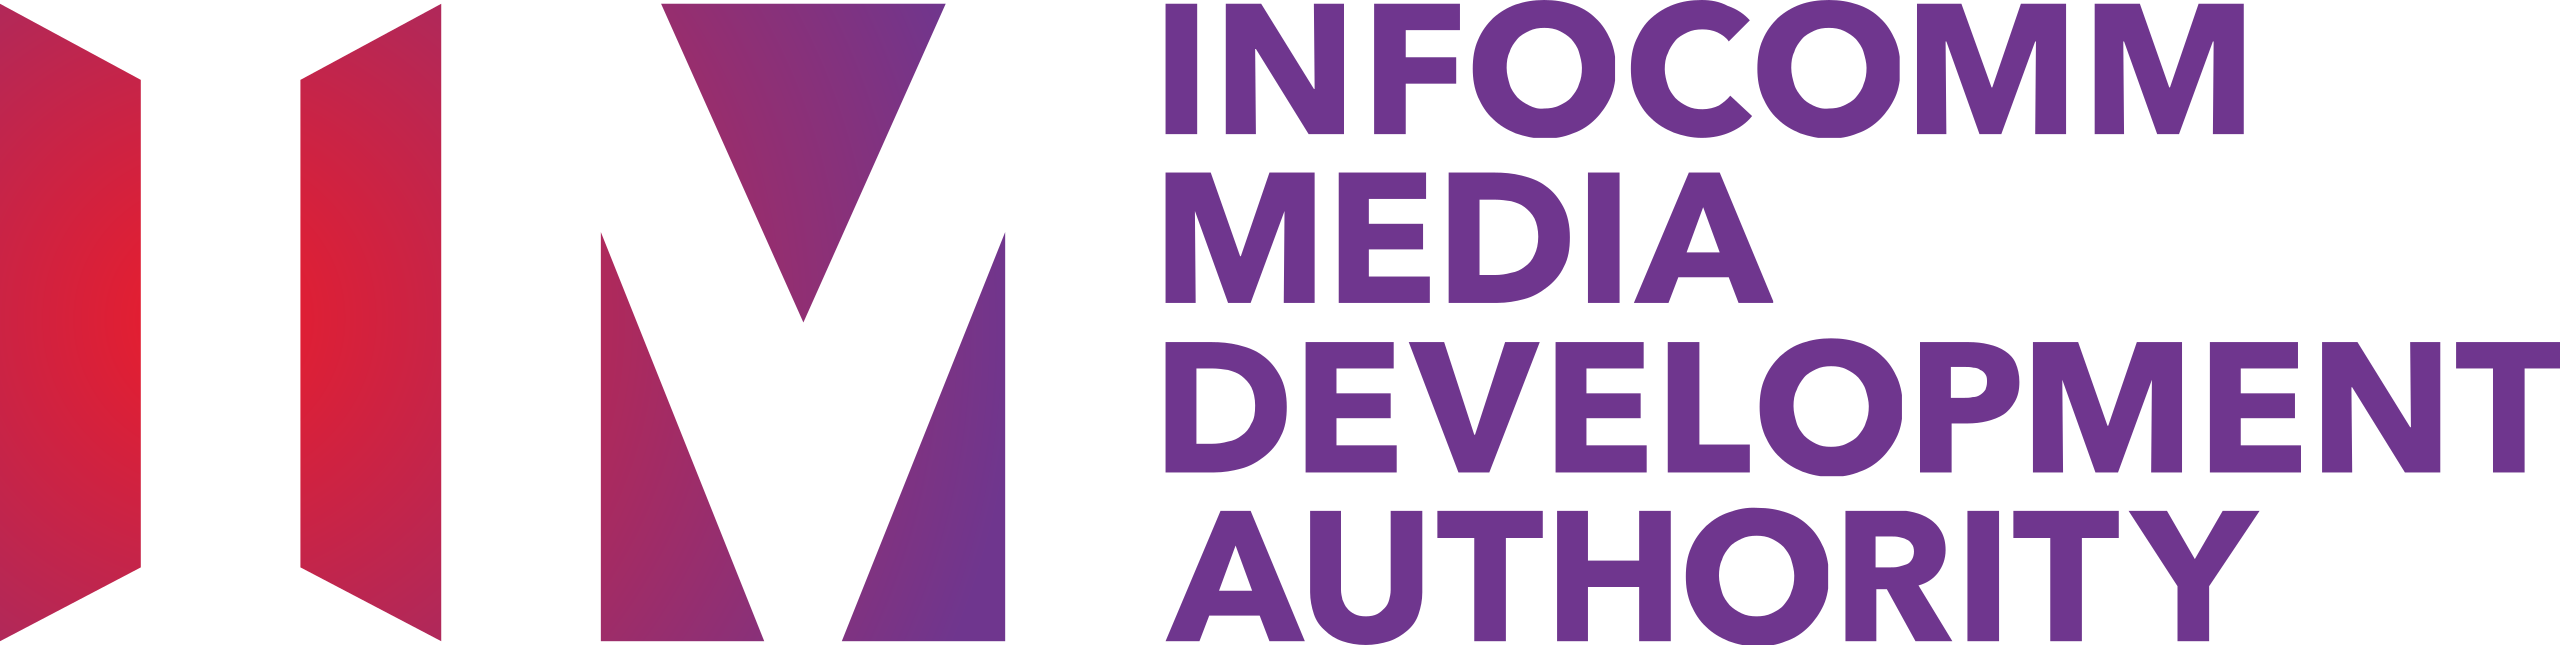 2560px-Infocomm_Media_Development_Authority_logo.svg